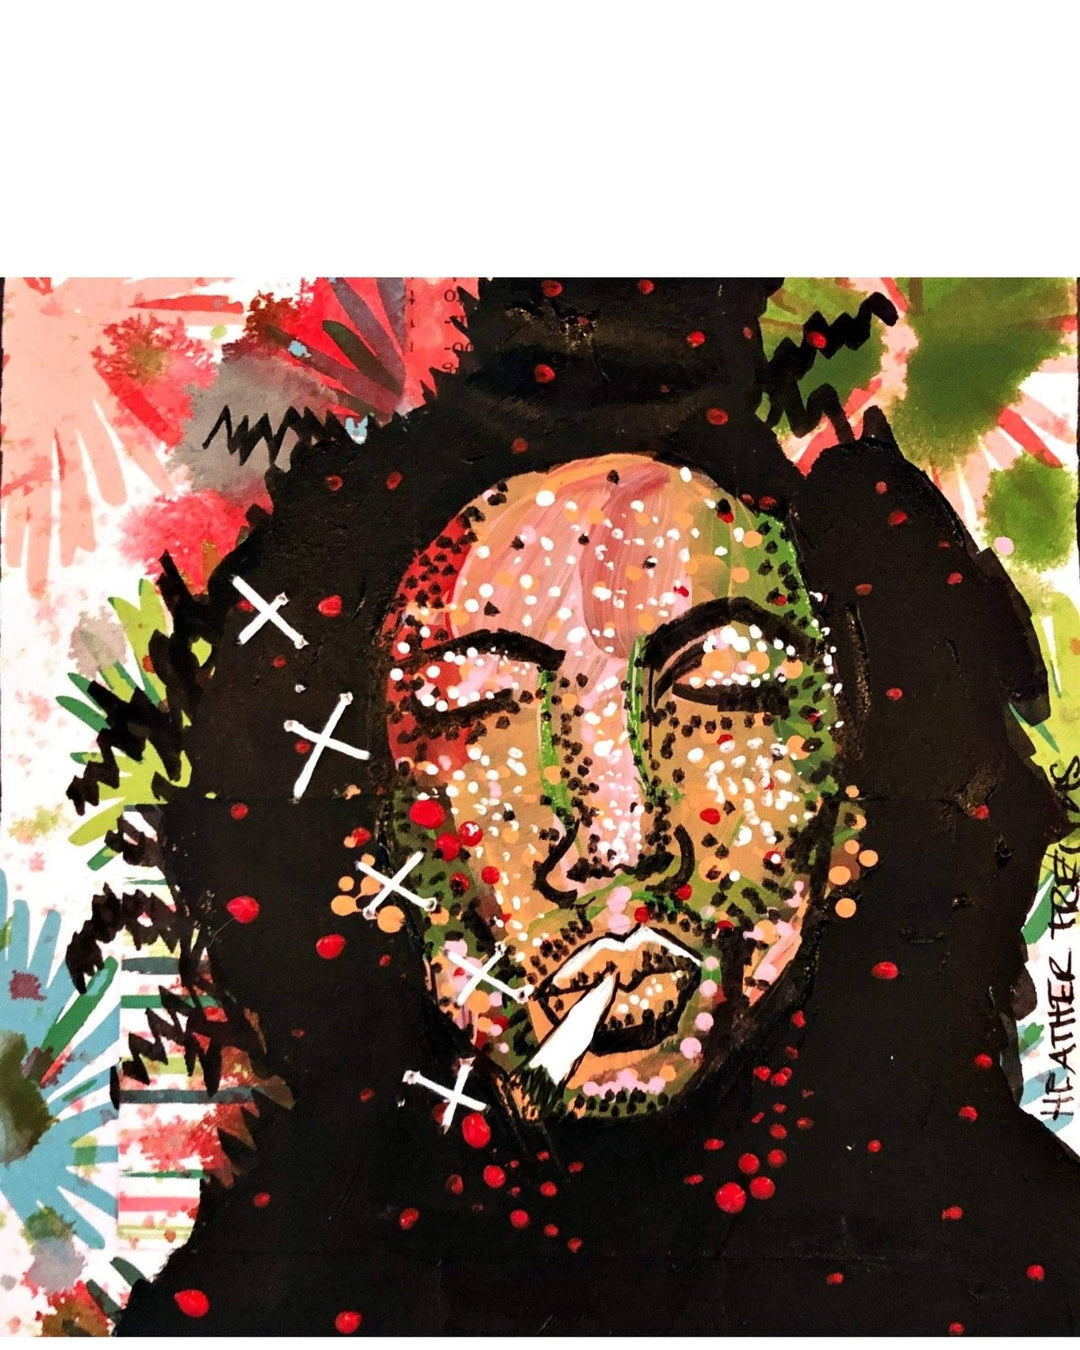 Bob Marley Smoking Study - Bob Marley - Heather Freitas 